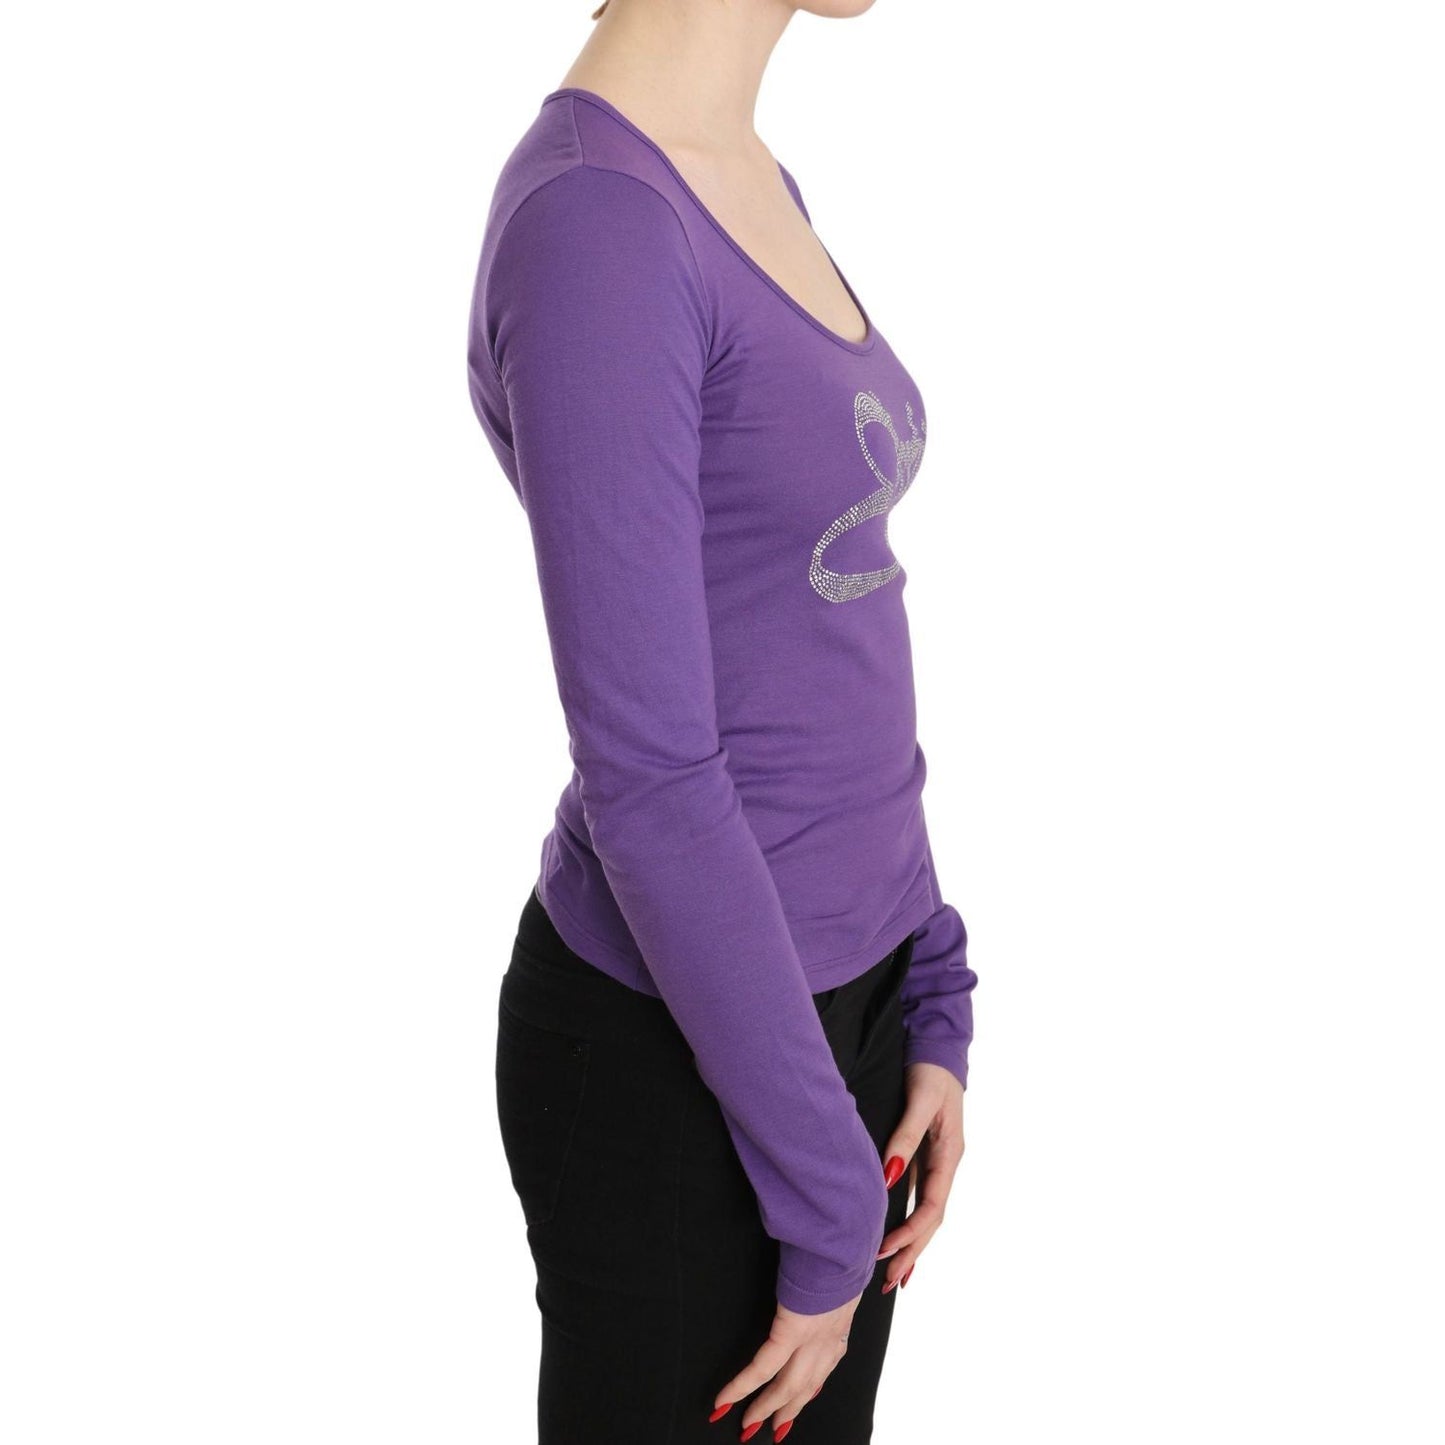 Exte Elegant Purple Crystal Embellished Long Sleeve Top purple-exte-crystal-embellished-long-sleeve-top-blouse